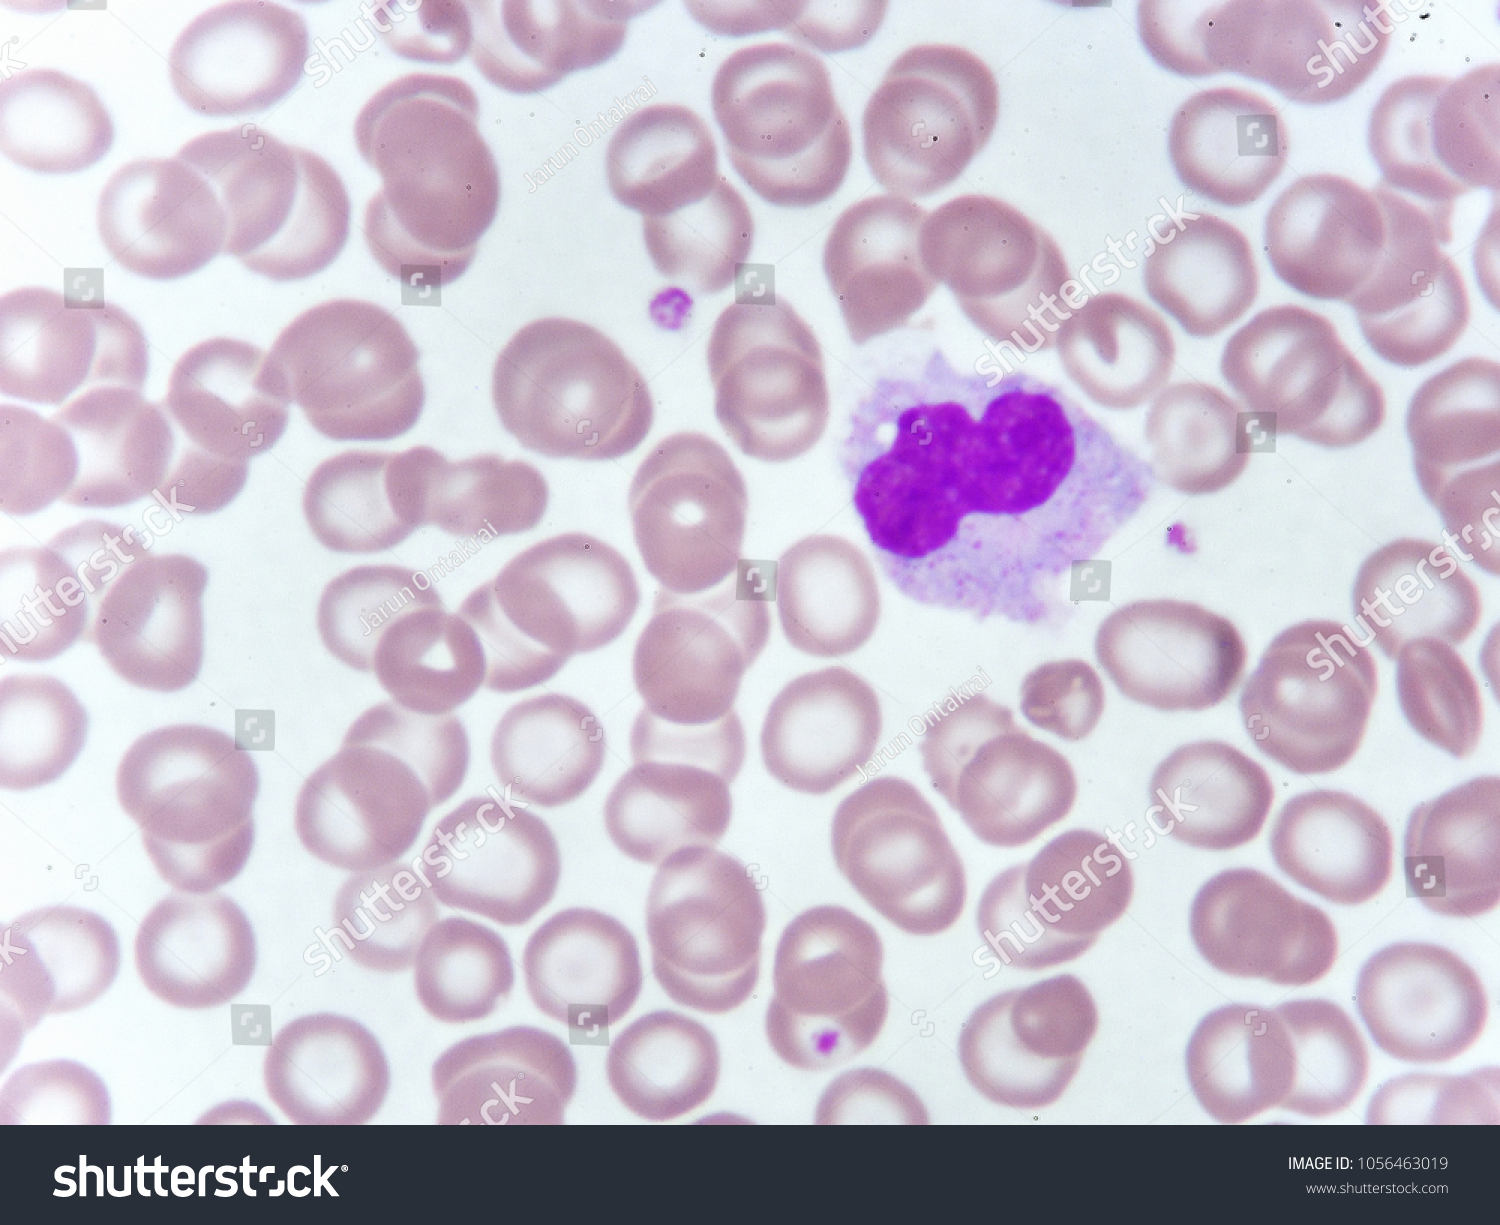 Monocyte White Blood Blood Stock Photo 1056463019 | Shutterstock